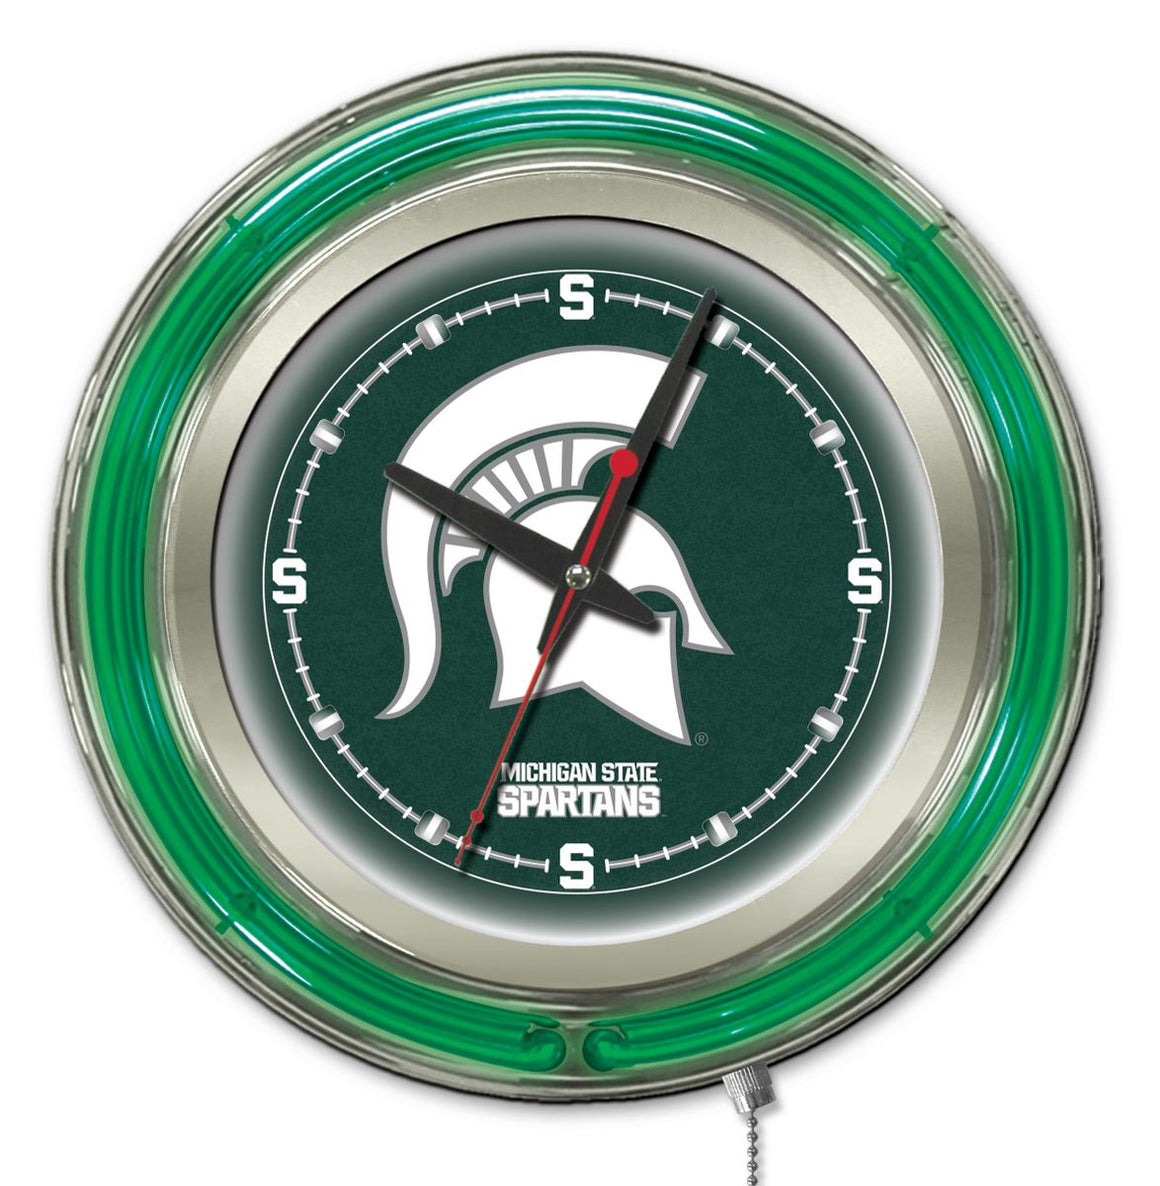 Michigan State 12' Shuffleboard Table - includes Bonus Logo Wall Clock! - Man Cave Boutique